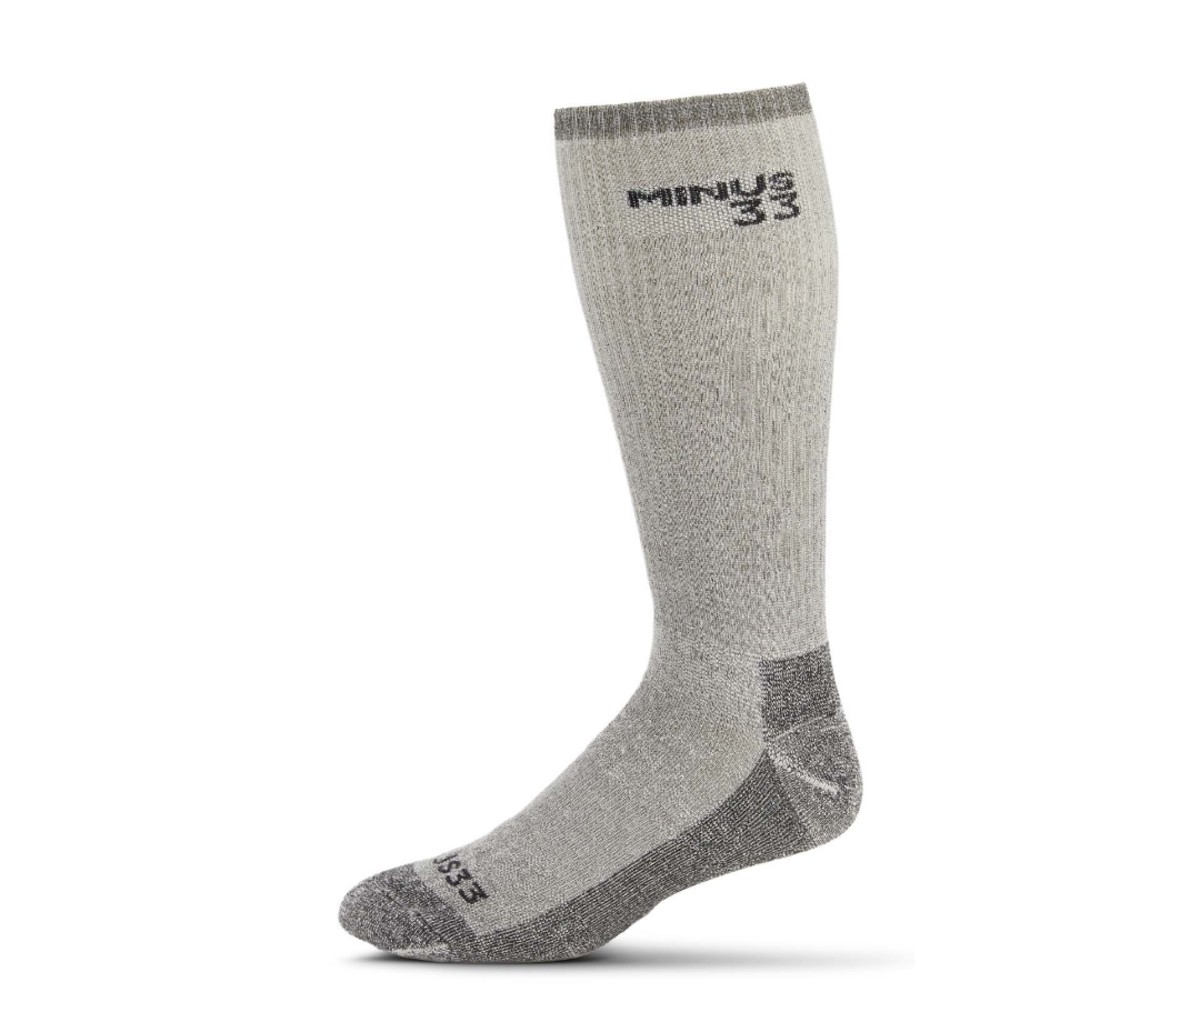 Minus33 Merino Wool Mountaineer Over the Calf Socks